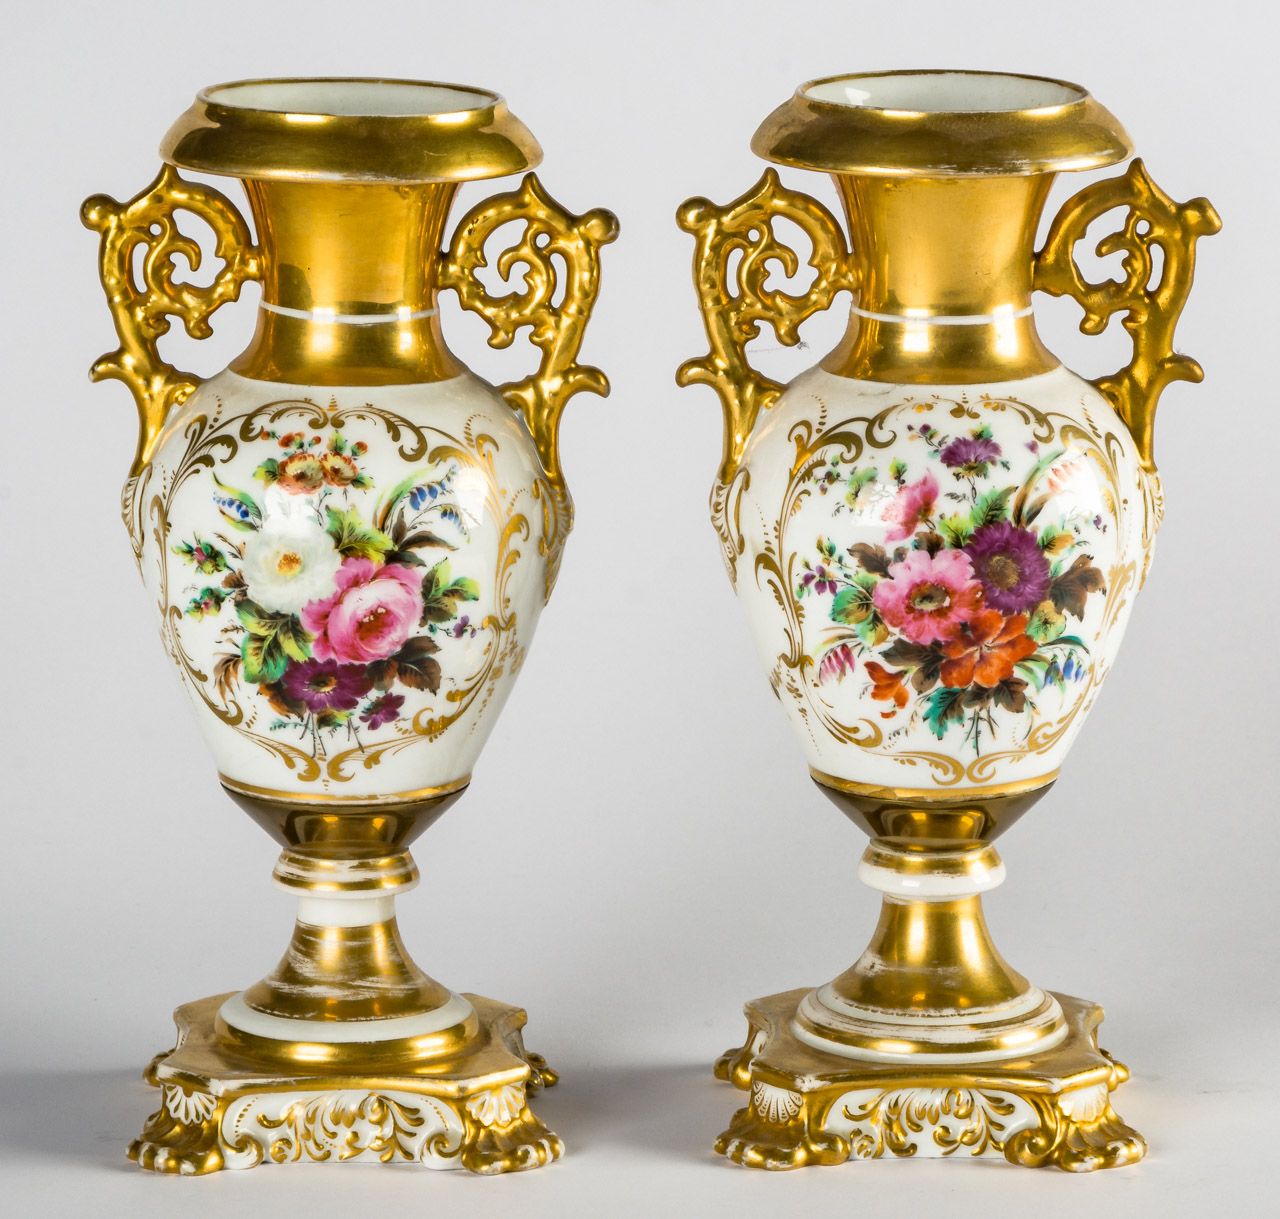 ZWEI PORZELLAN-VASEN 俄罗斯，科尼洛夫兄弟的瓷器厂，圣彼得堡 1839-1861年


每个约25厘米高





两个俄罗斯瓷器花瓶


&hellip;